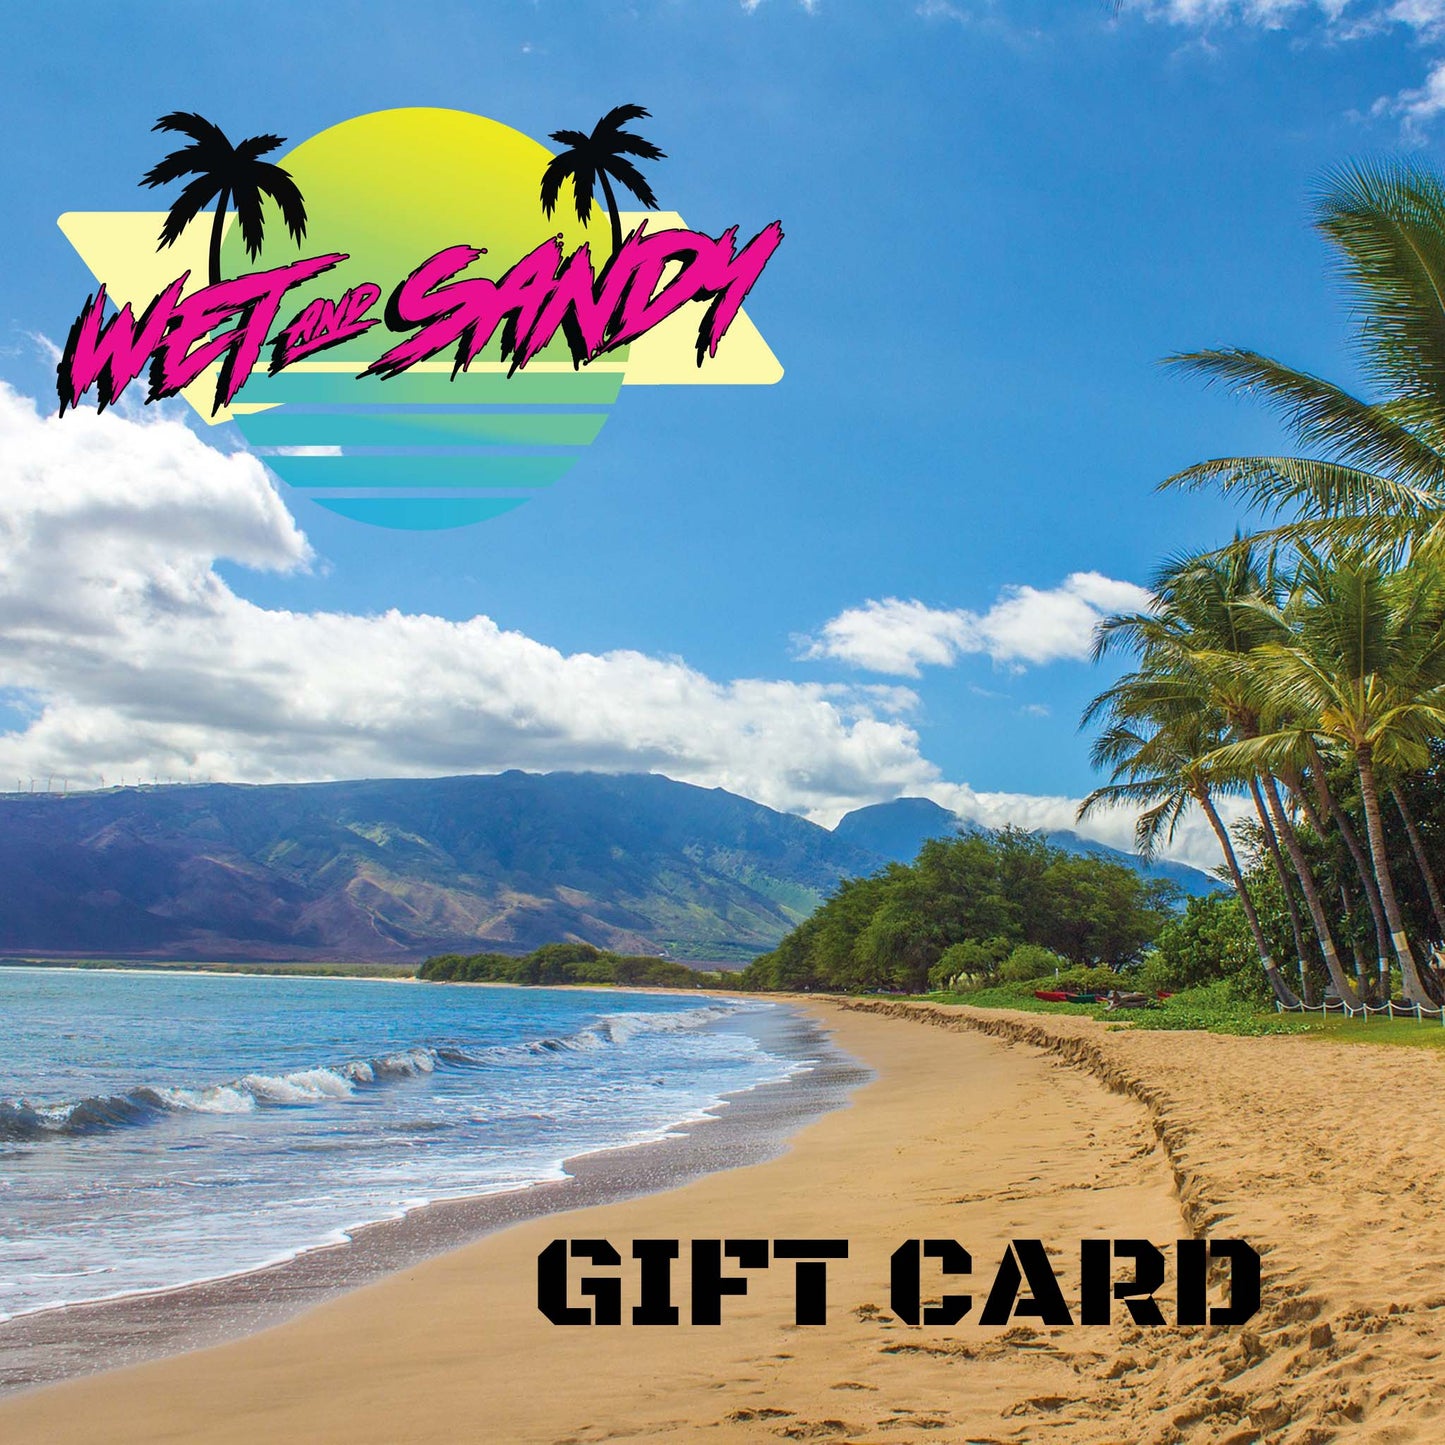 WET & SANDY GIFT CARD